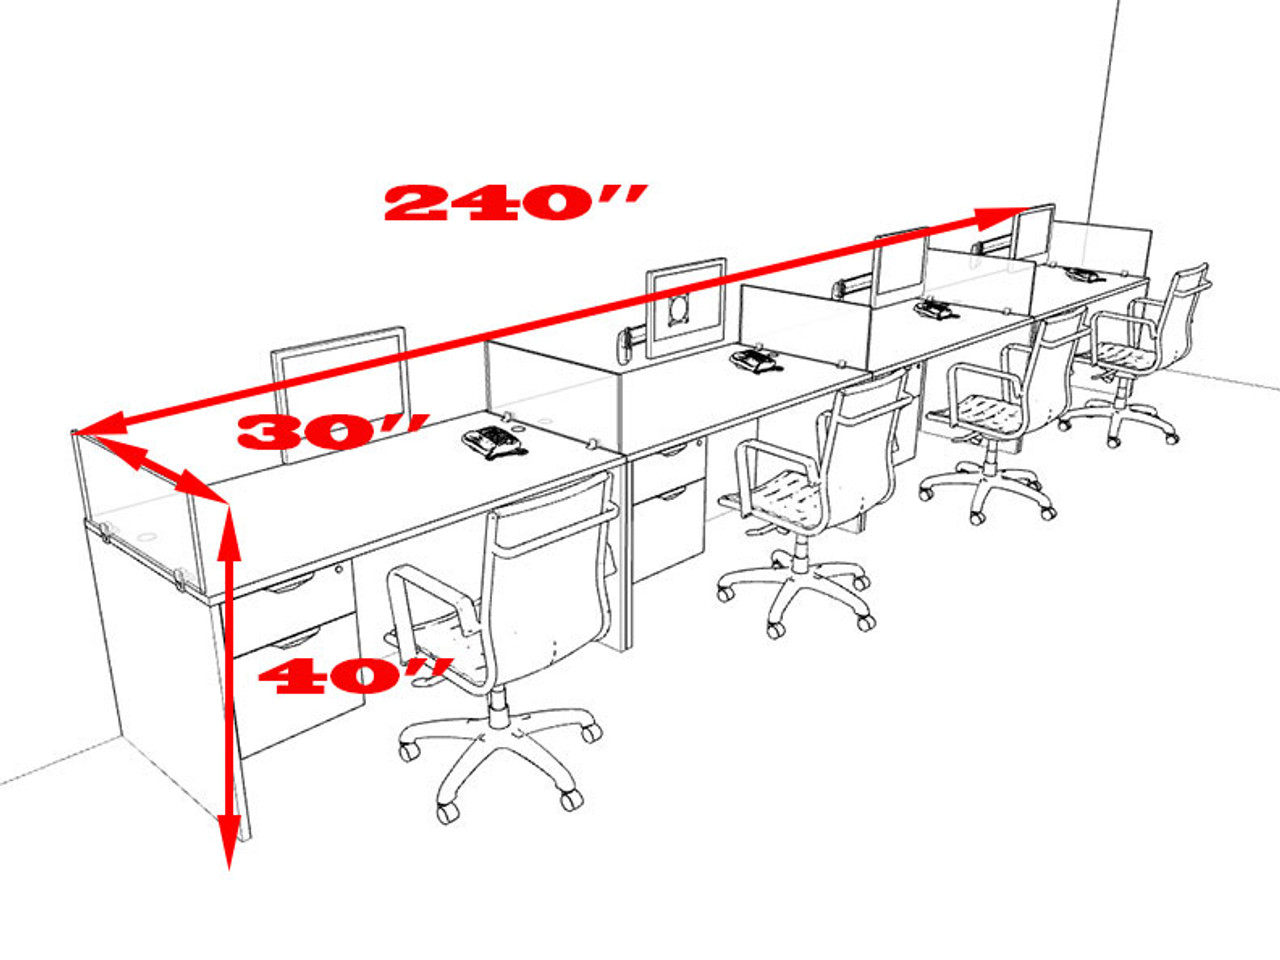 Four Person Modern Accoustic Divider Office Workstation Desk Set, #OT-SUL-SPRB32